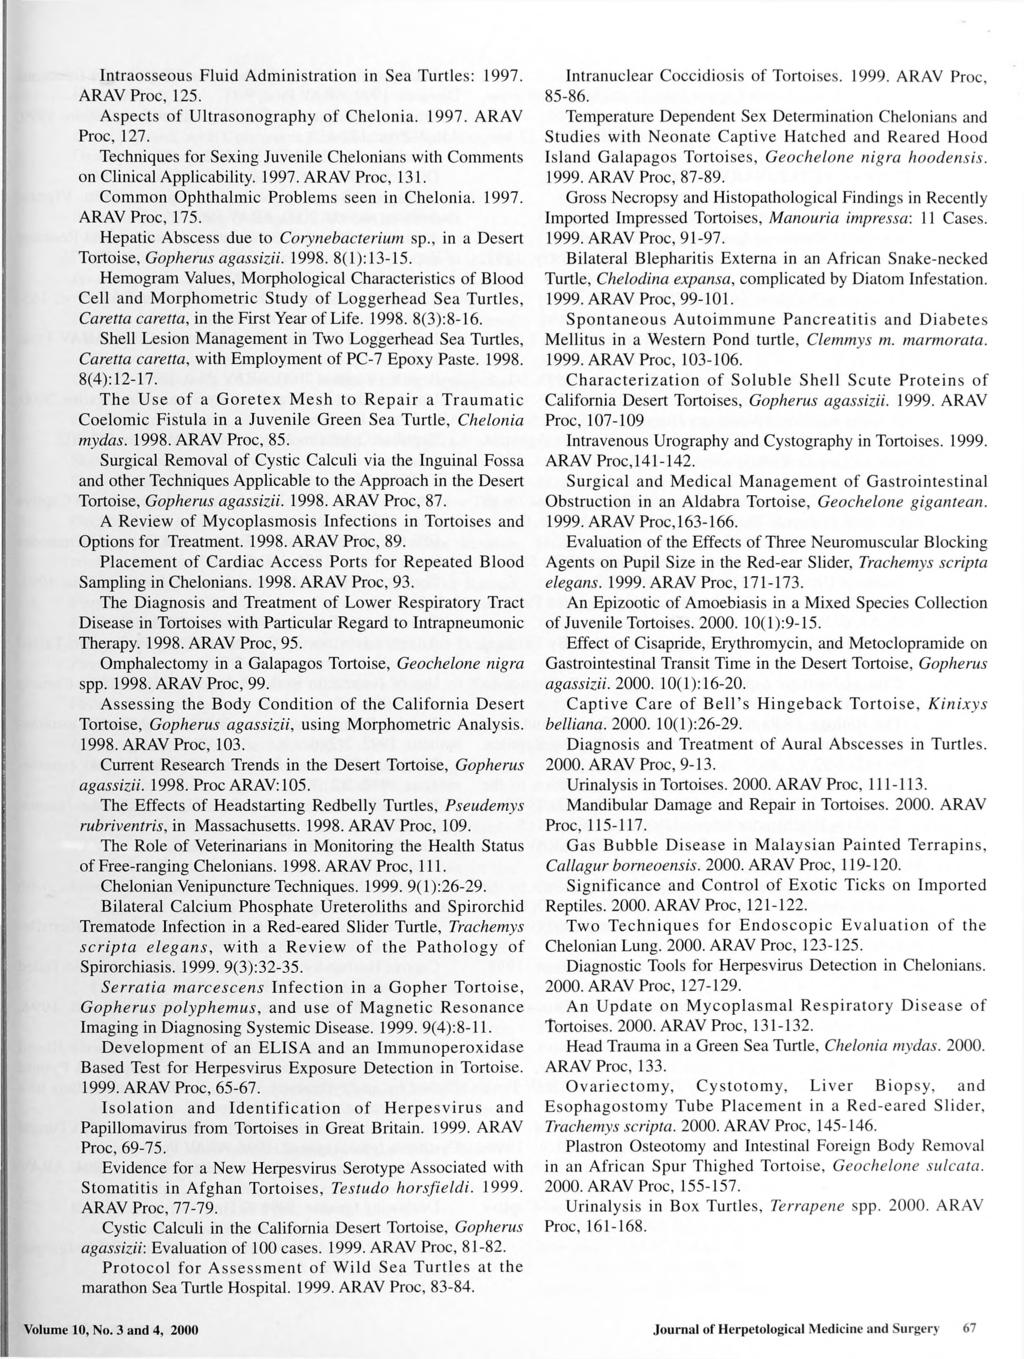 Intraosseous Fluid Administration in Sea Turtles: 1997. ARAV Proc, 125. Aspects of Ultrasonography of Chelonia. 1997. ARAV Proc, 127.